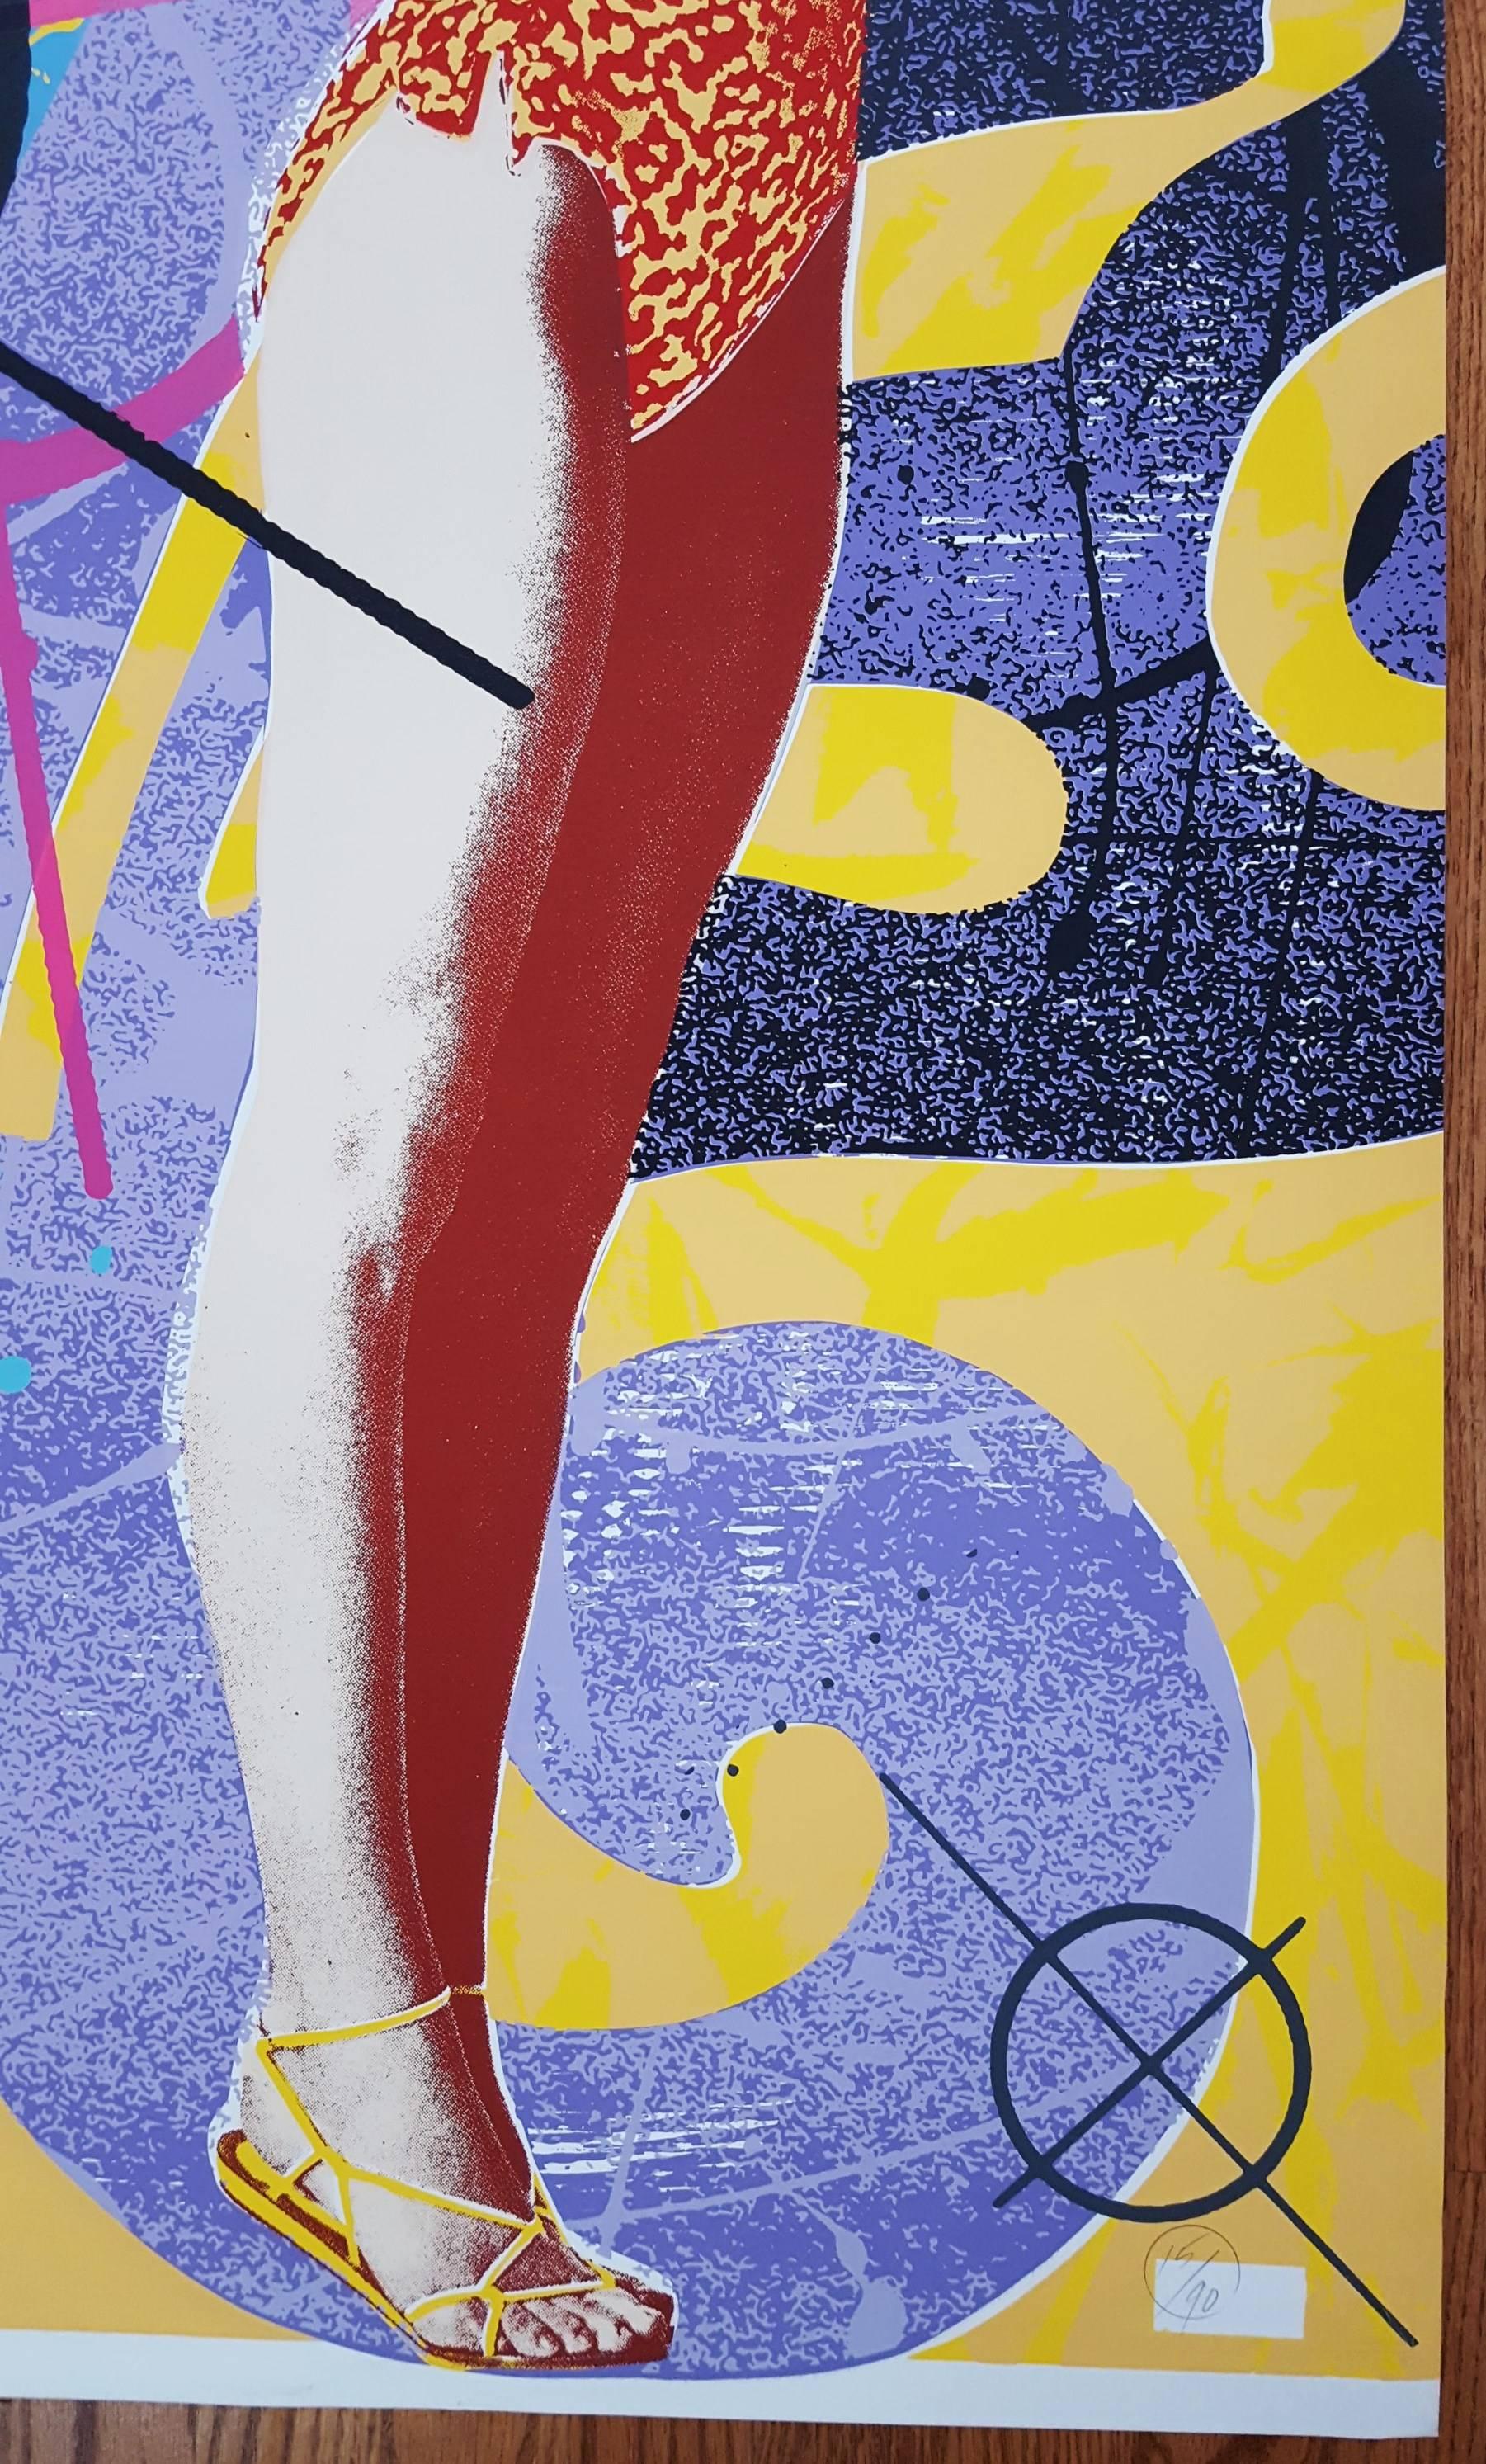 Cindy Crawford - Pop Art Print by Richard Duardo